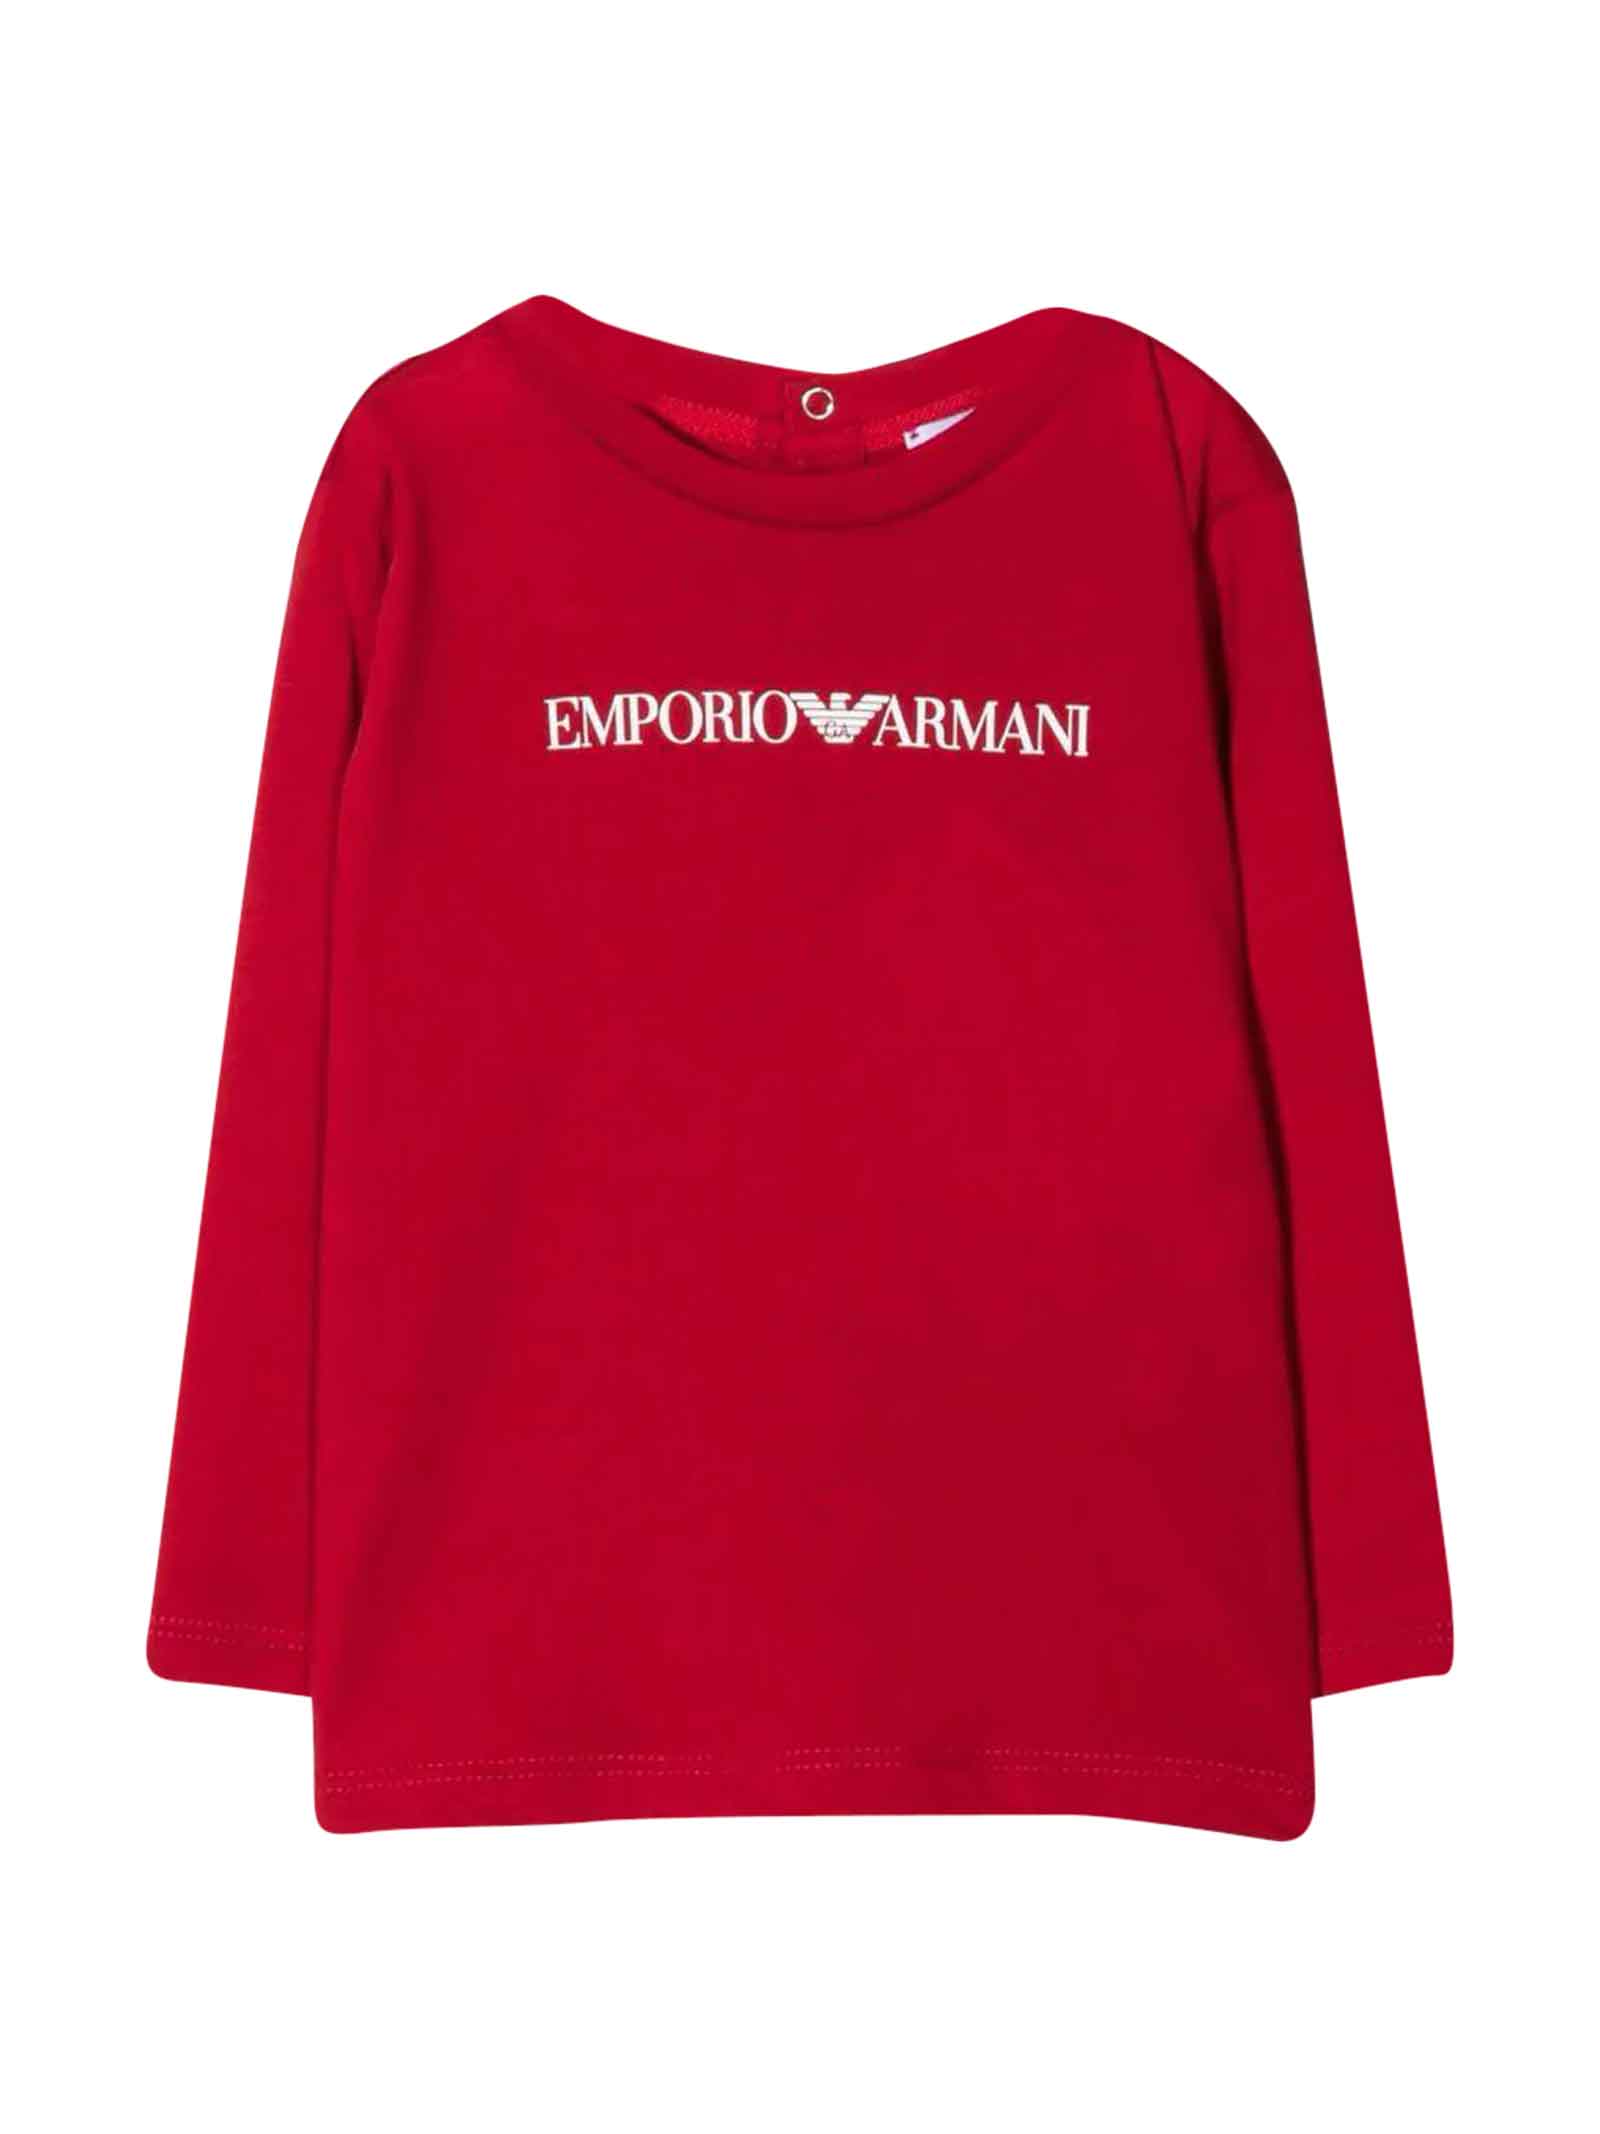 Emporio Armani Red T-shirt Unisex